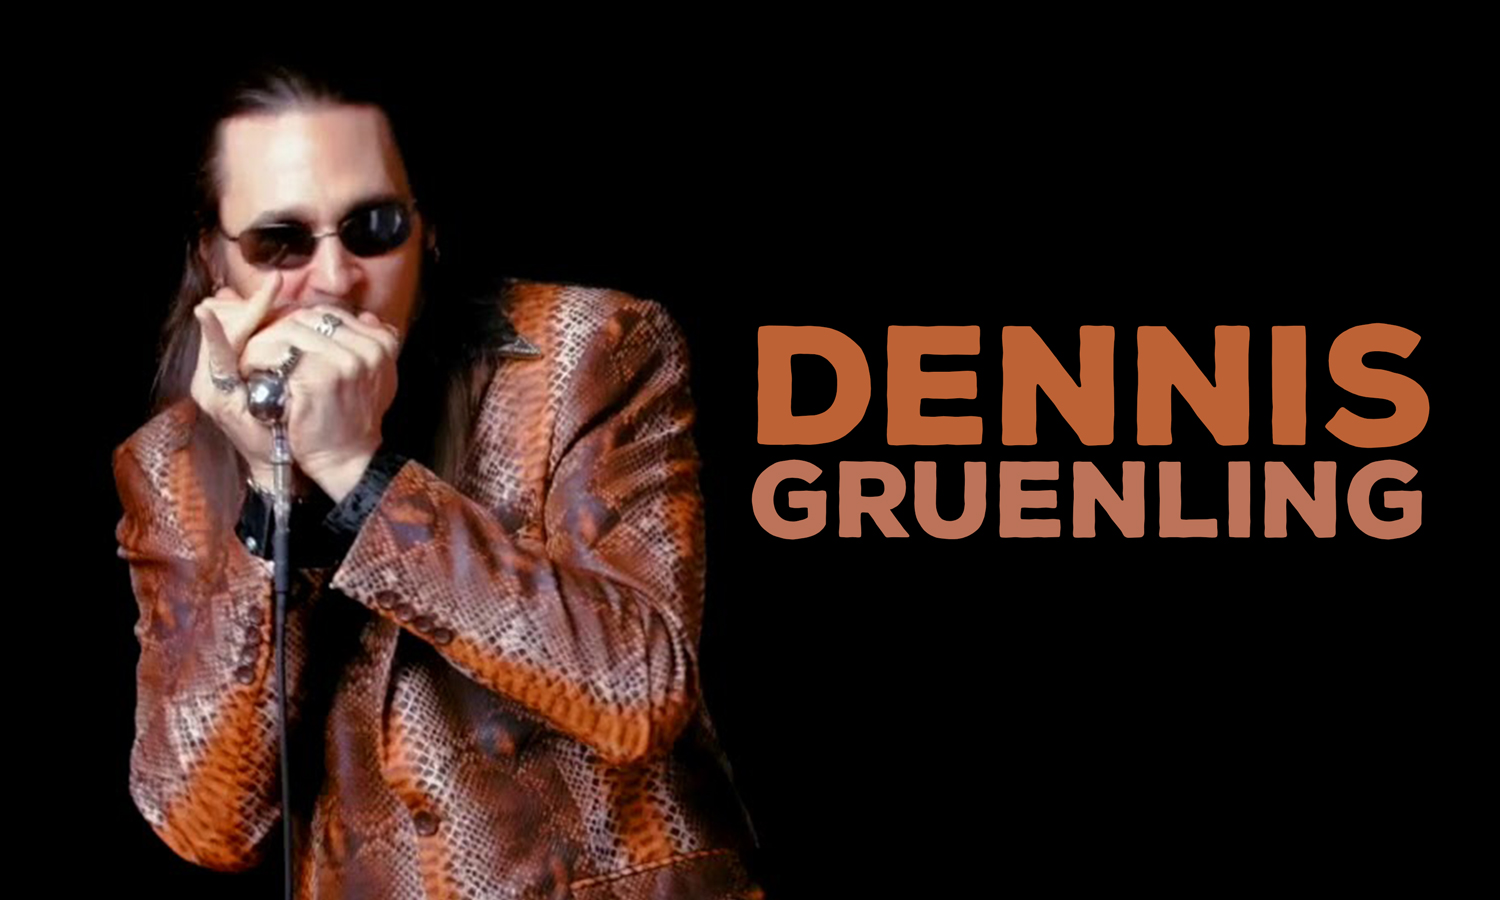 Dennis Gruenling